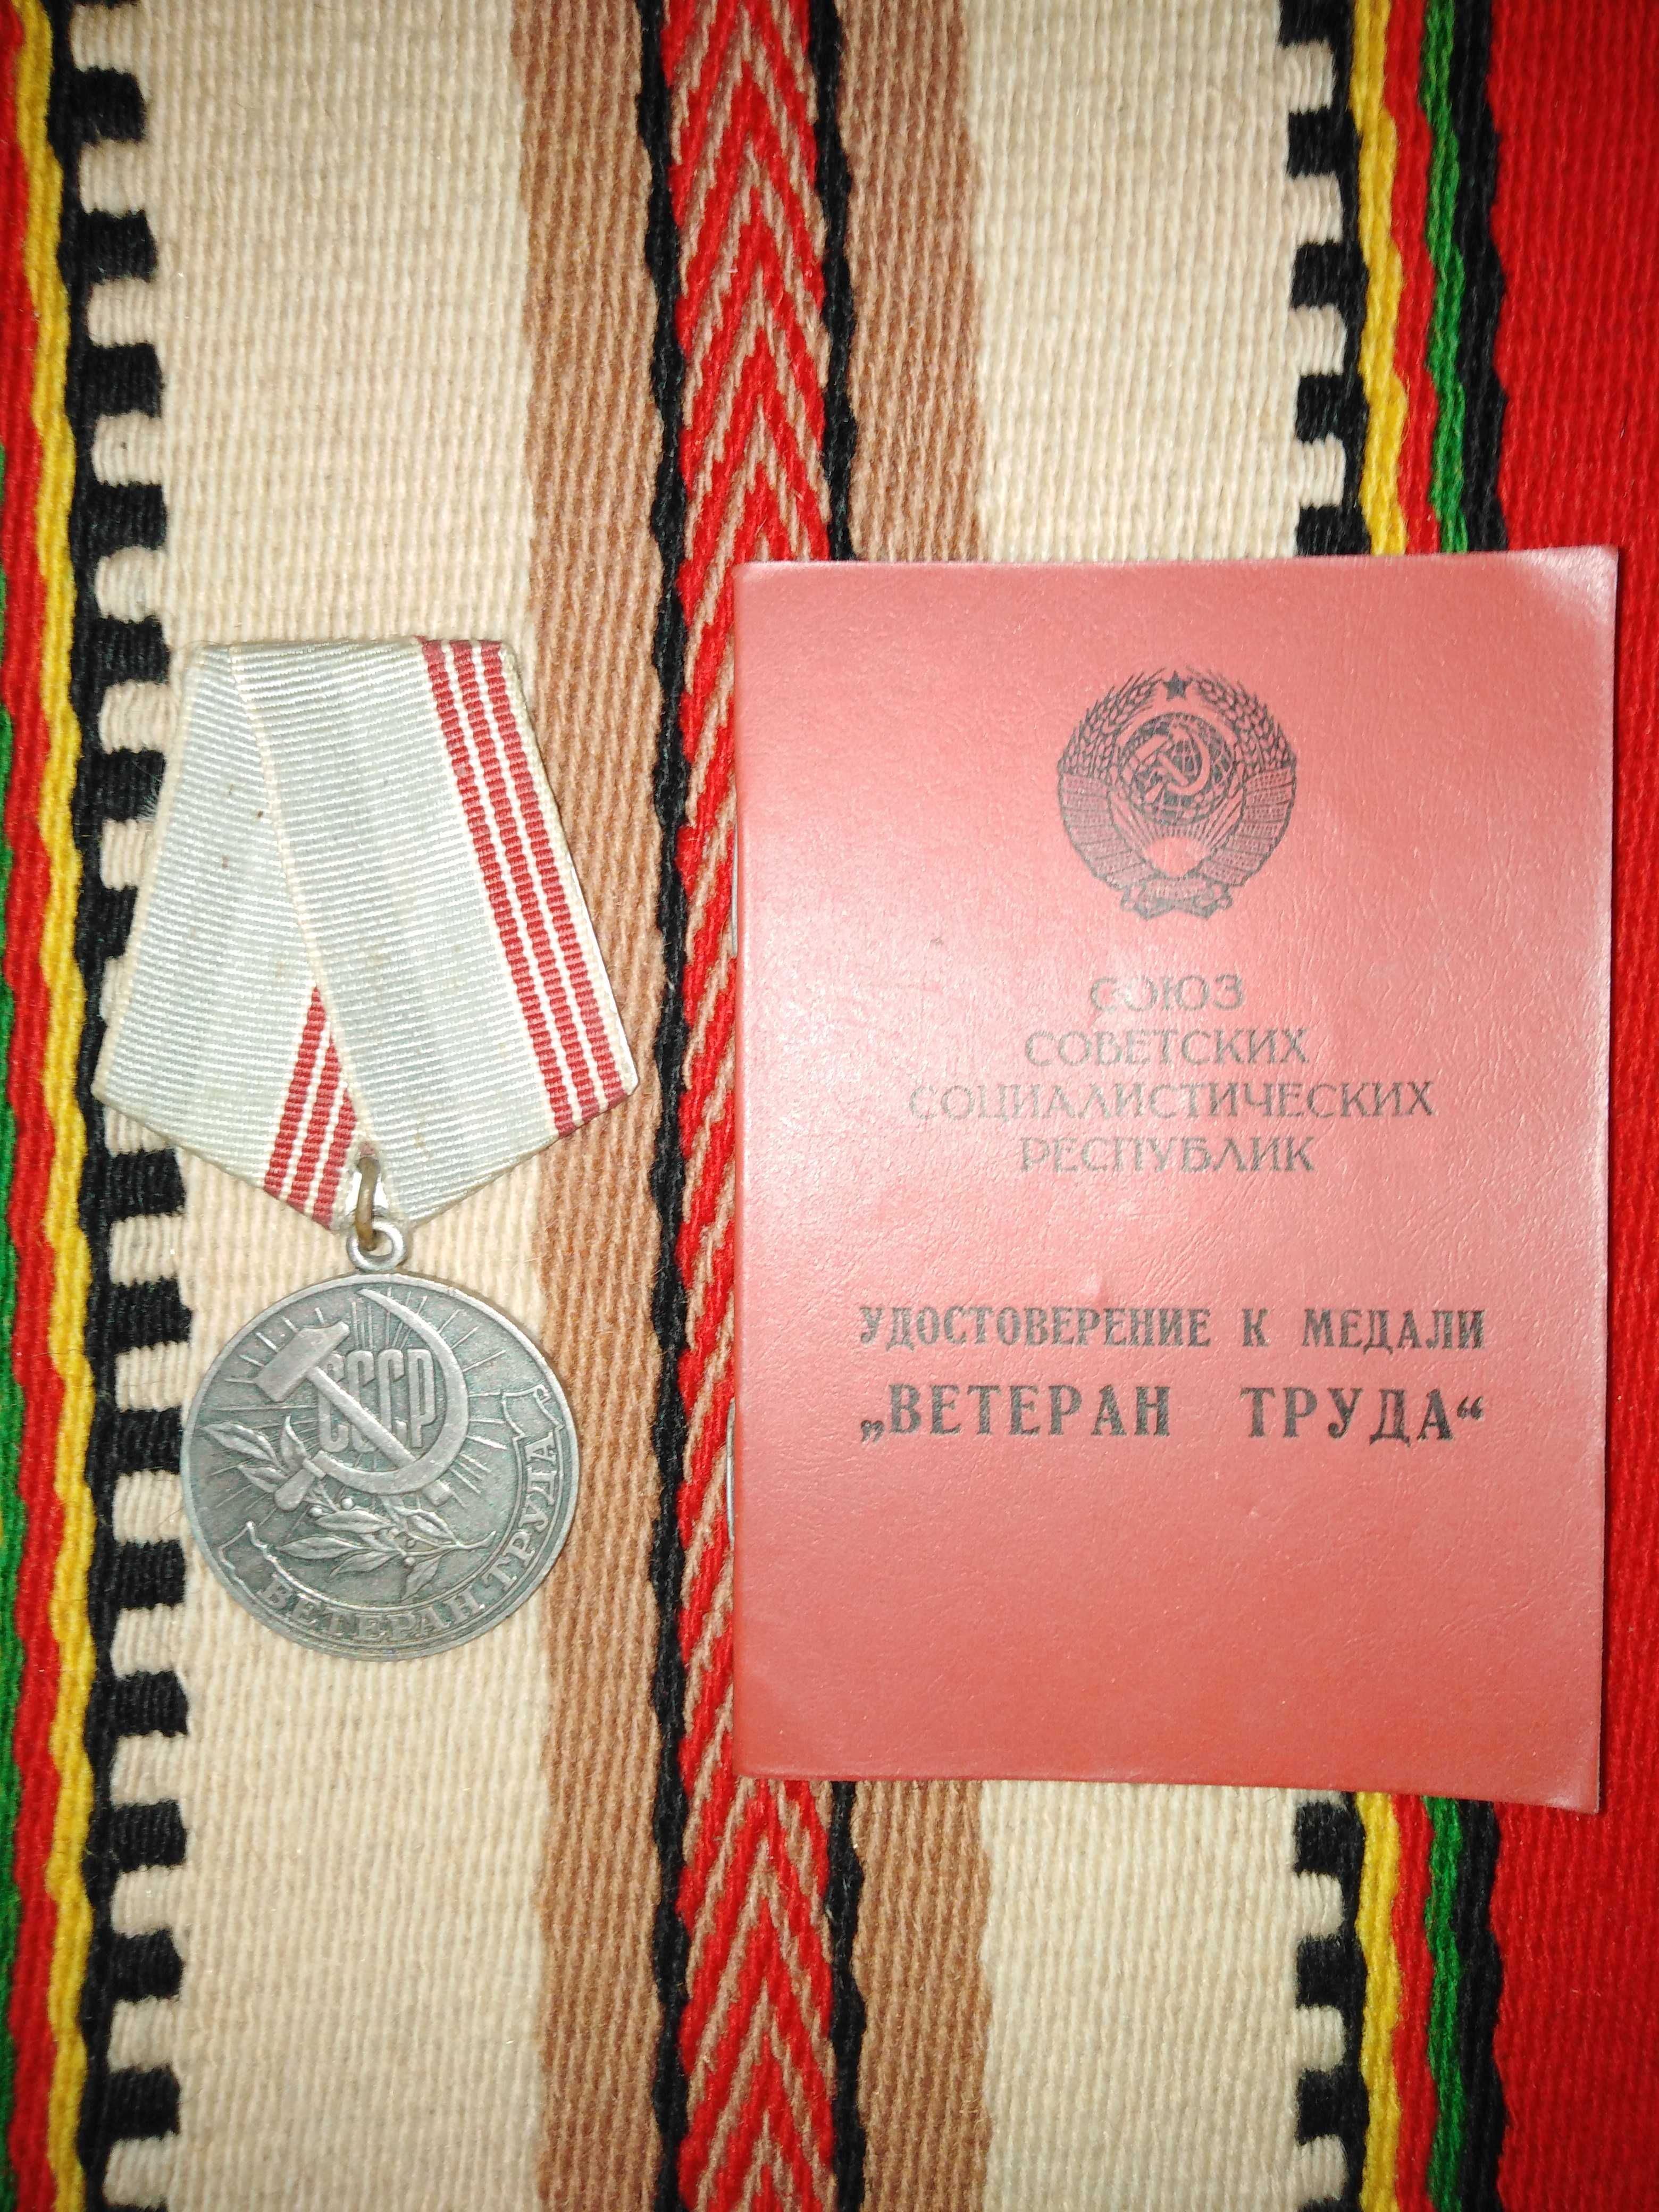 Medalhas ex combatentes URSS 2ª Guerra